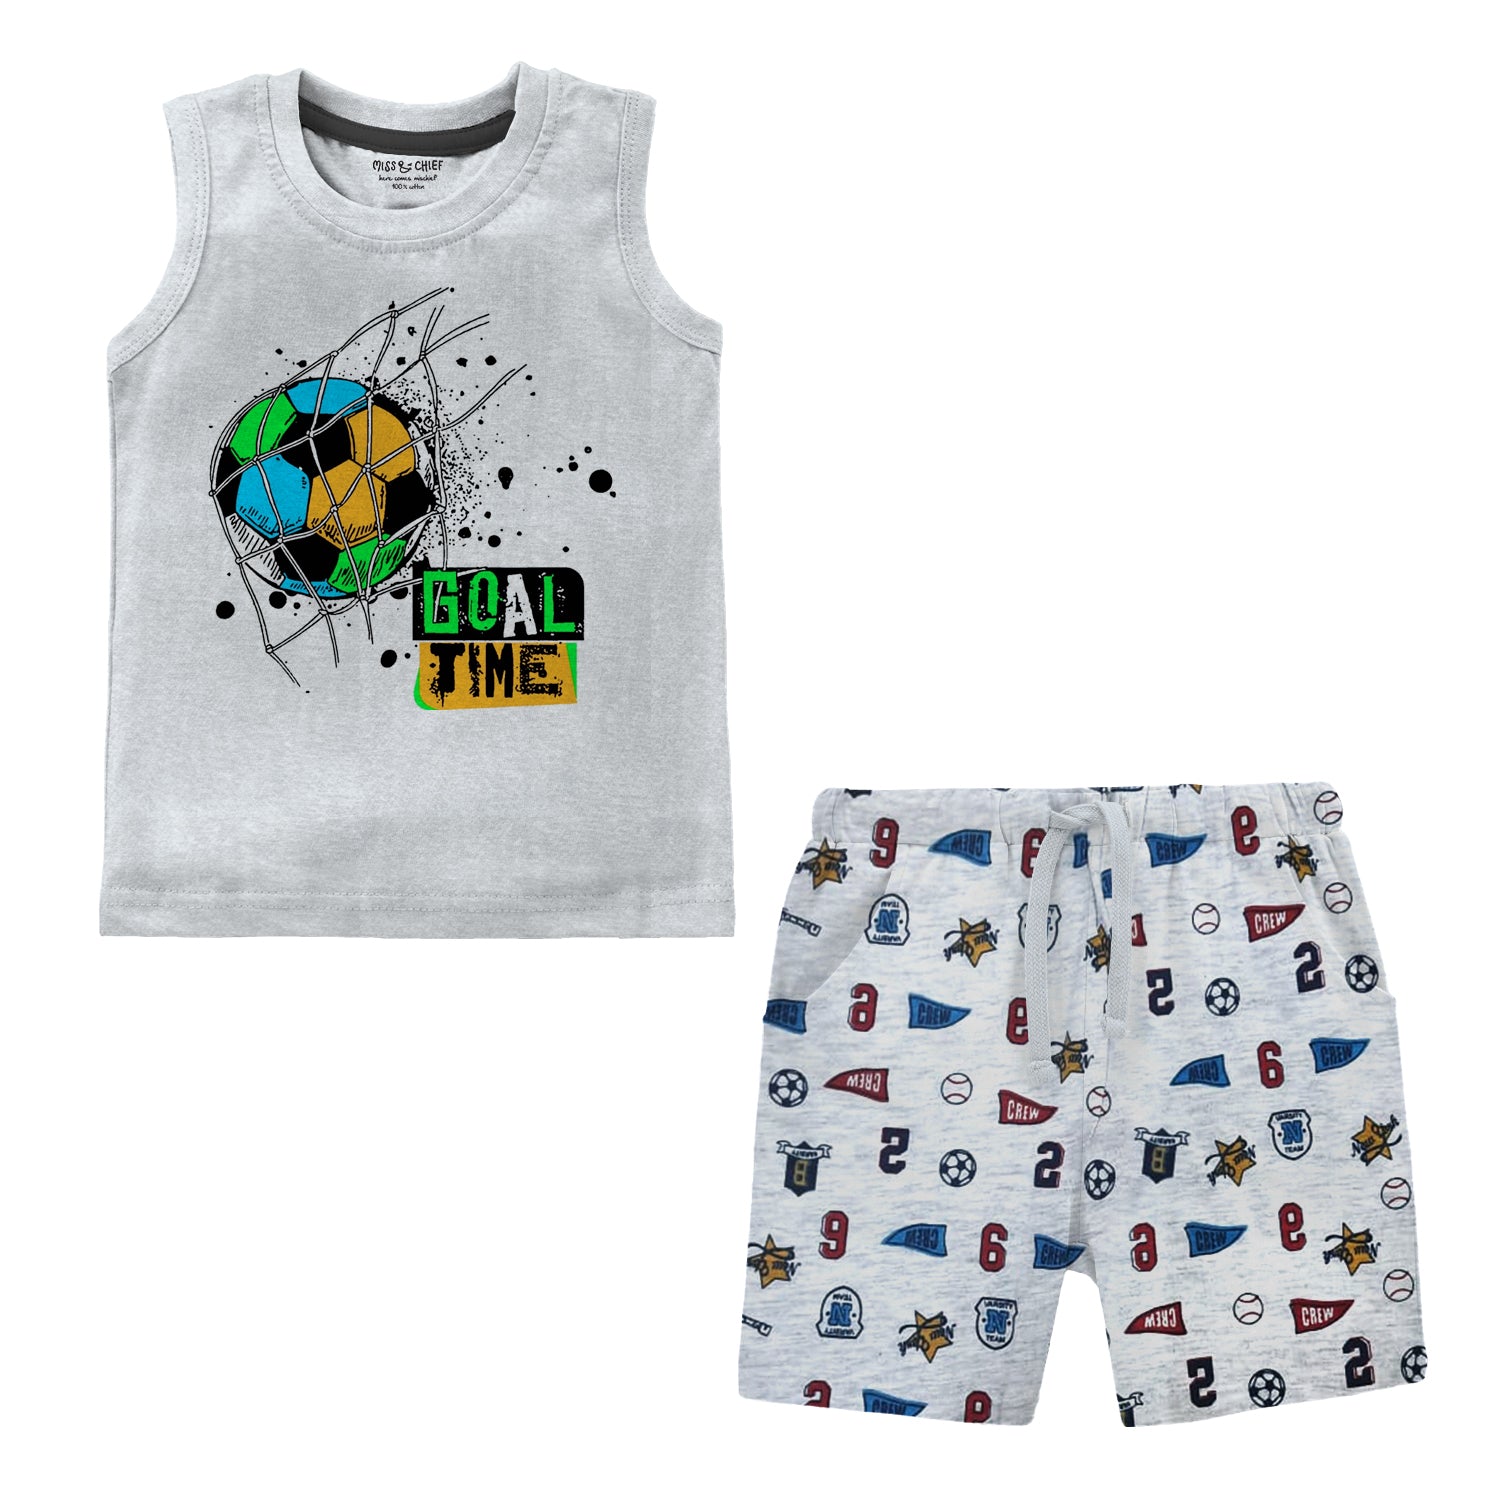 Baby Boys Casual Summer Sleeveless T-shirt Shorts